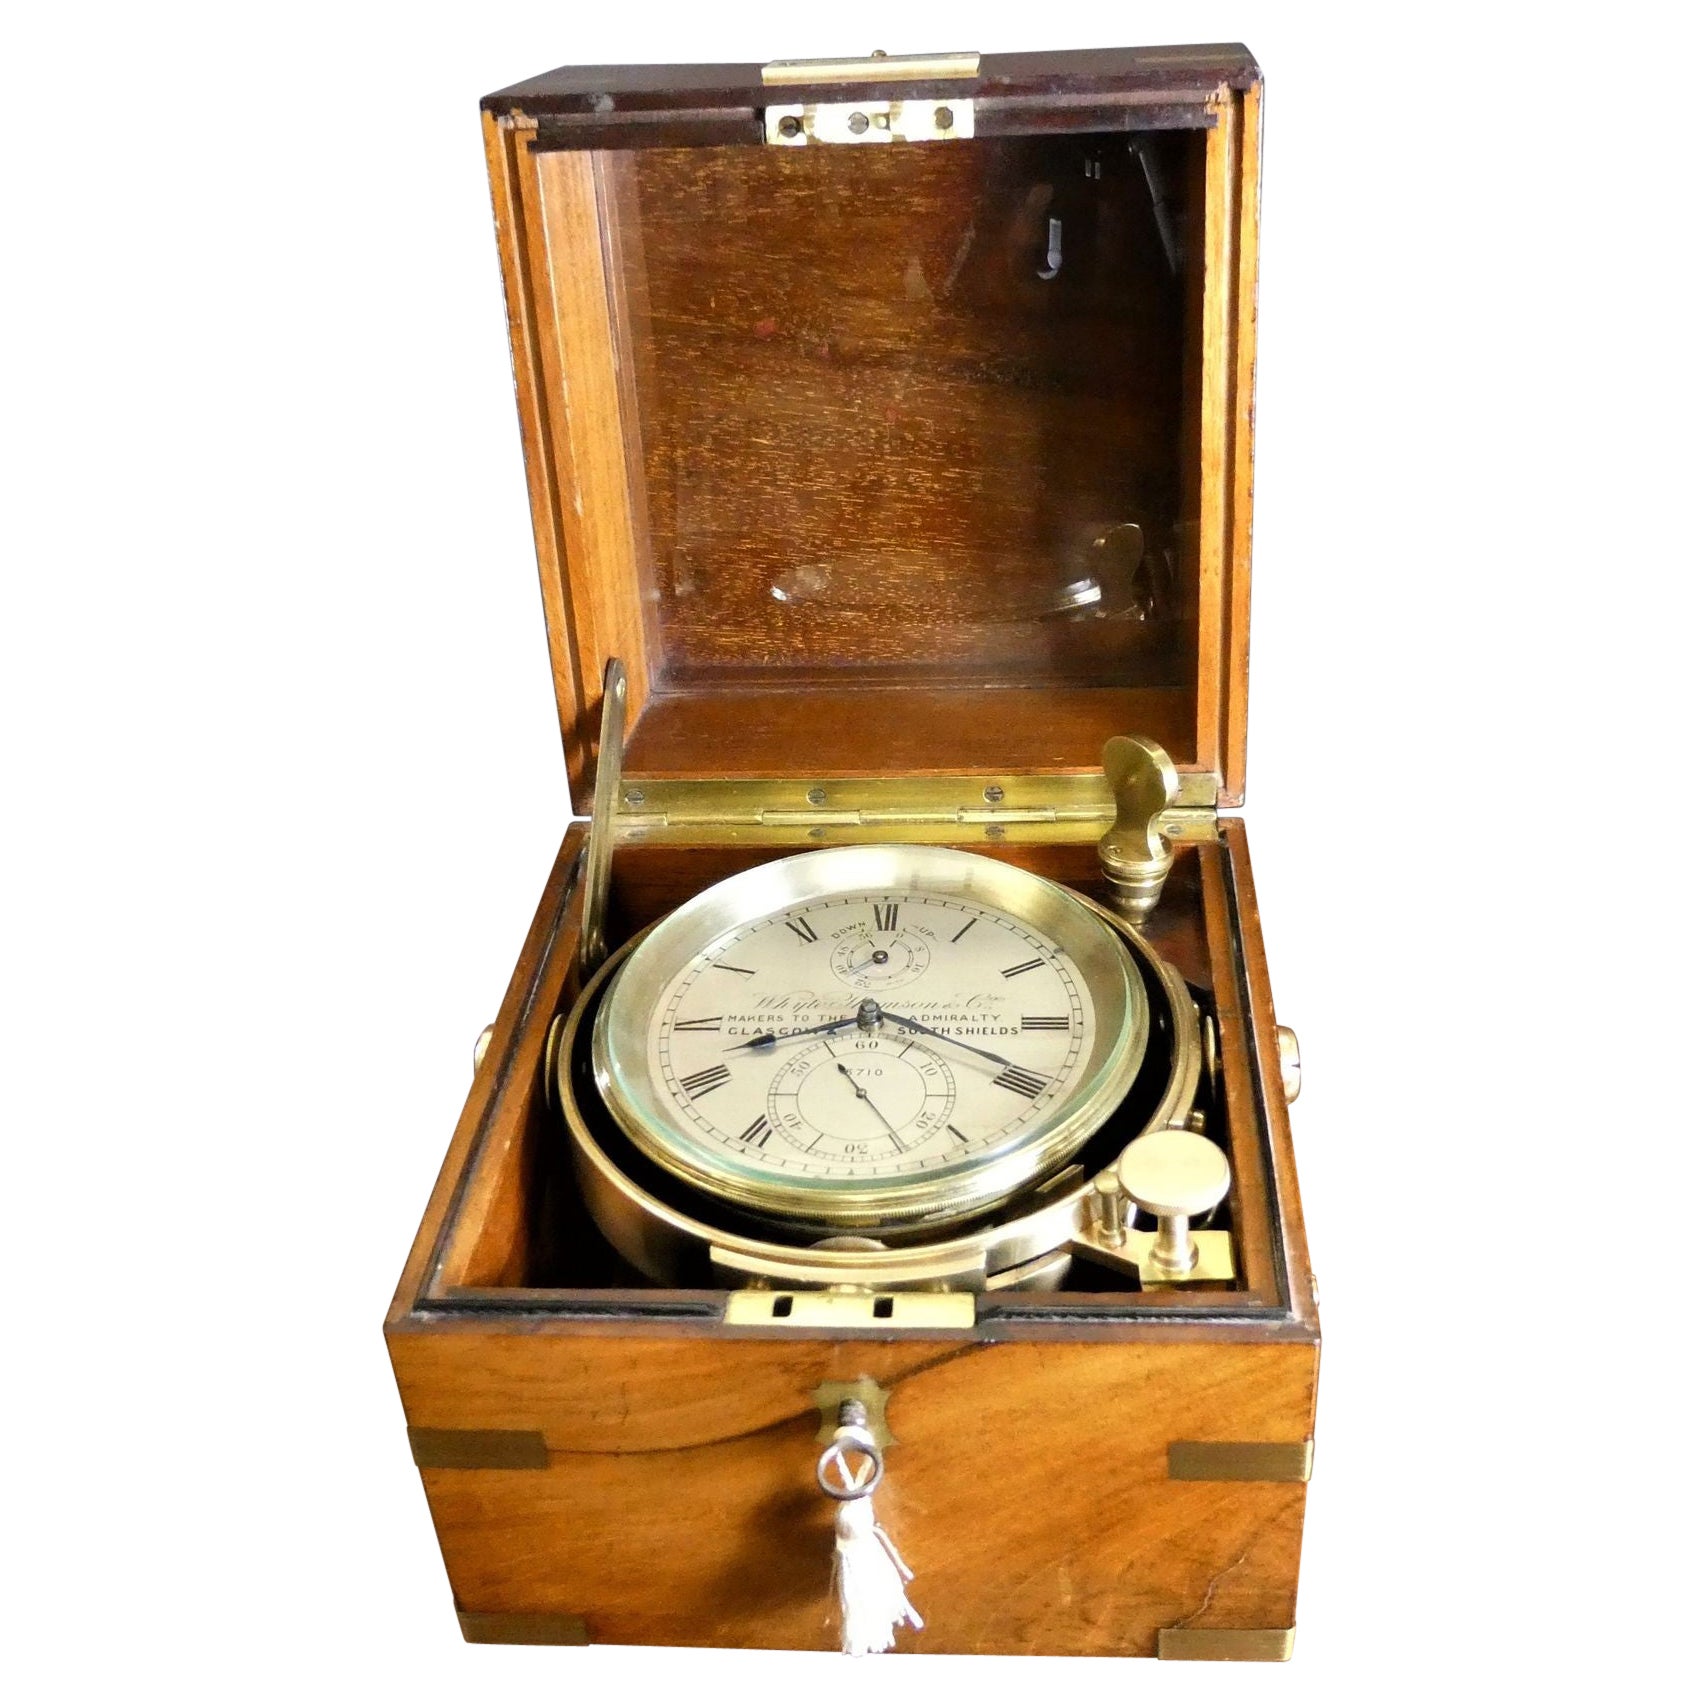 Who invented the marine chronometer?